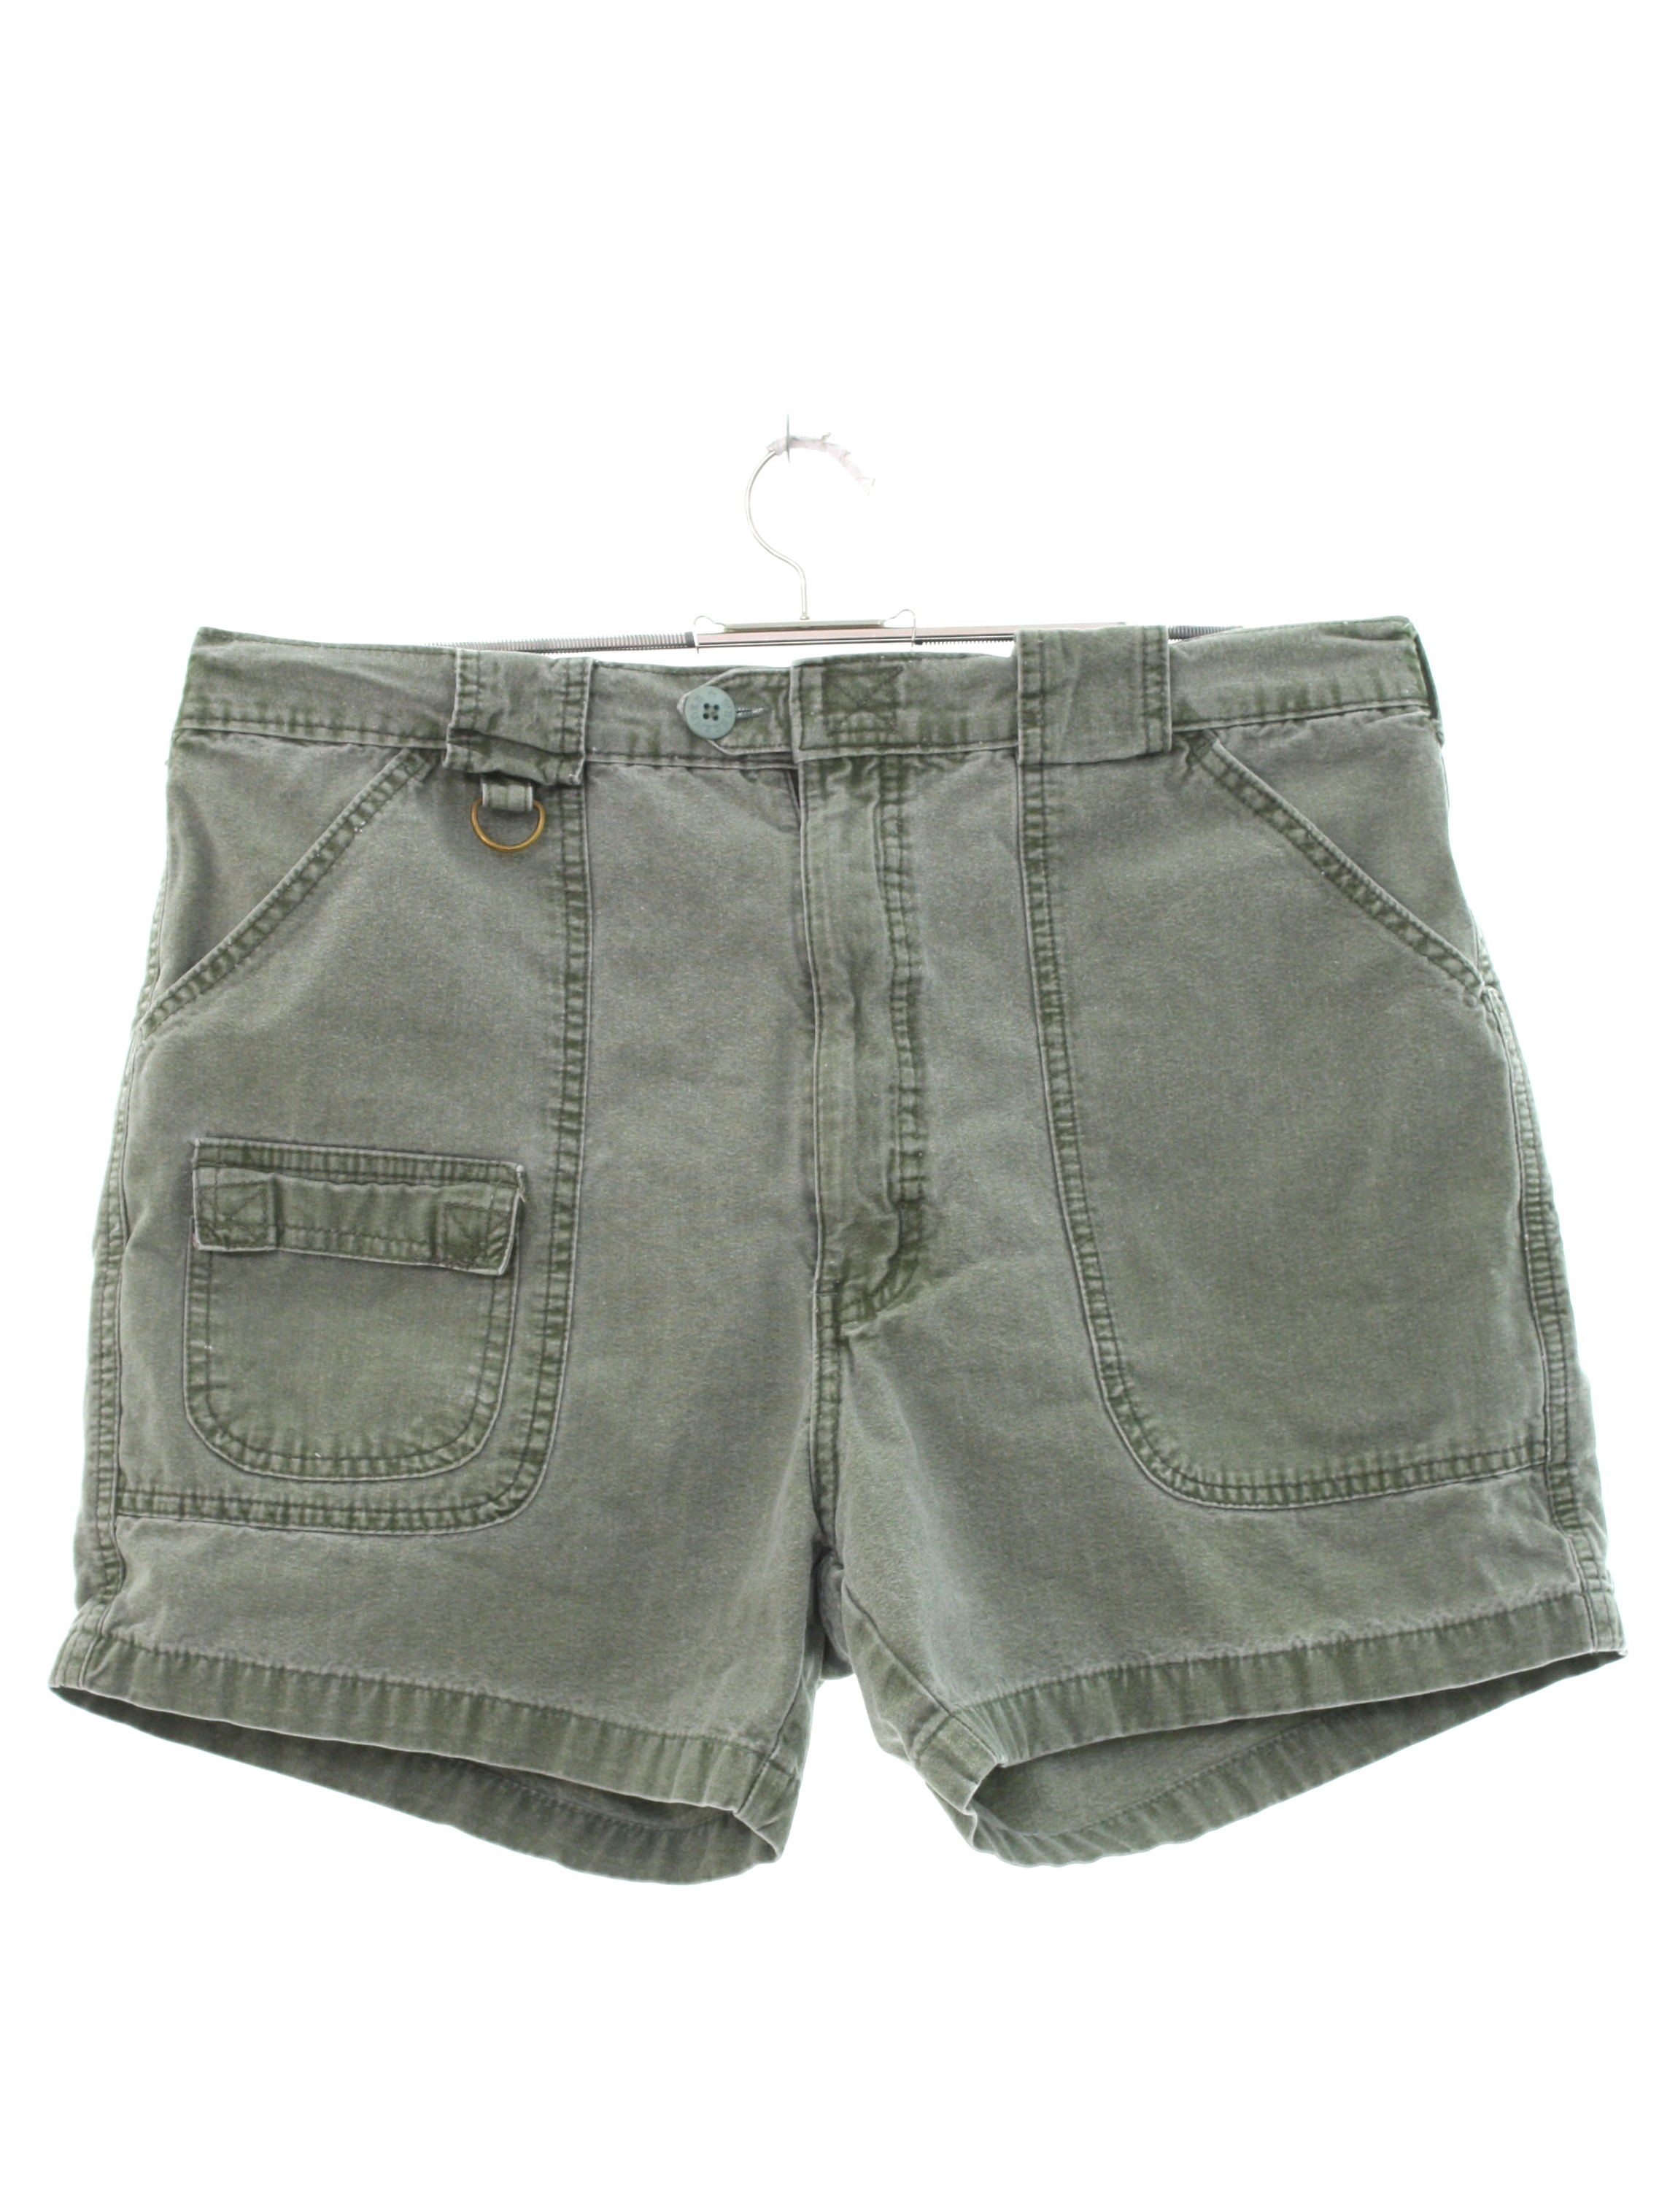 1980s Vintage Shorts: 80s -Weekender- Mens olive drab background stone ...